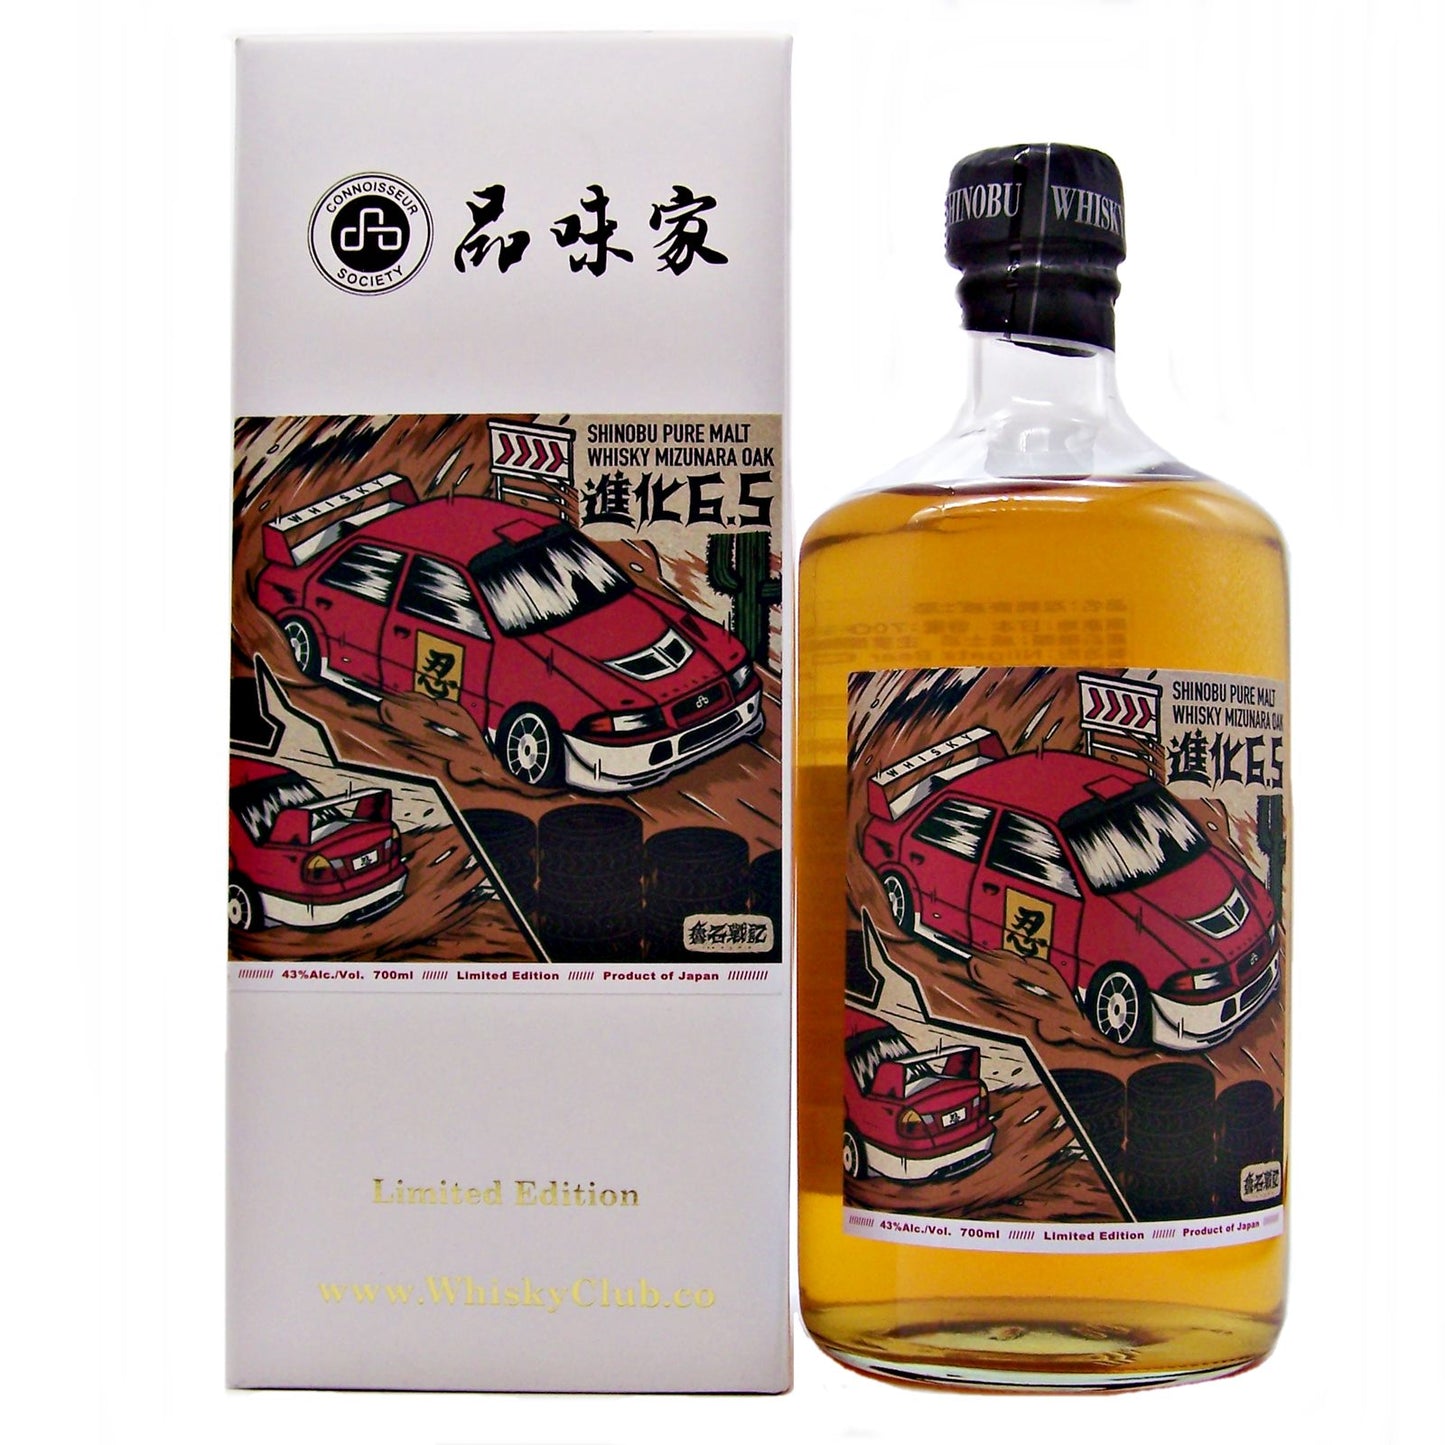 Shinobu Pure Malt Whisky Mizunara Oak Connoisseur Society